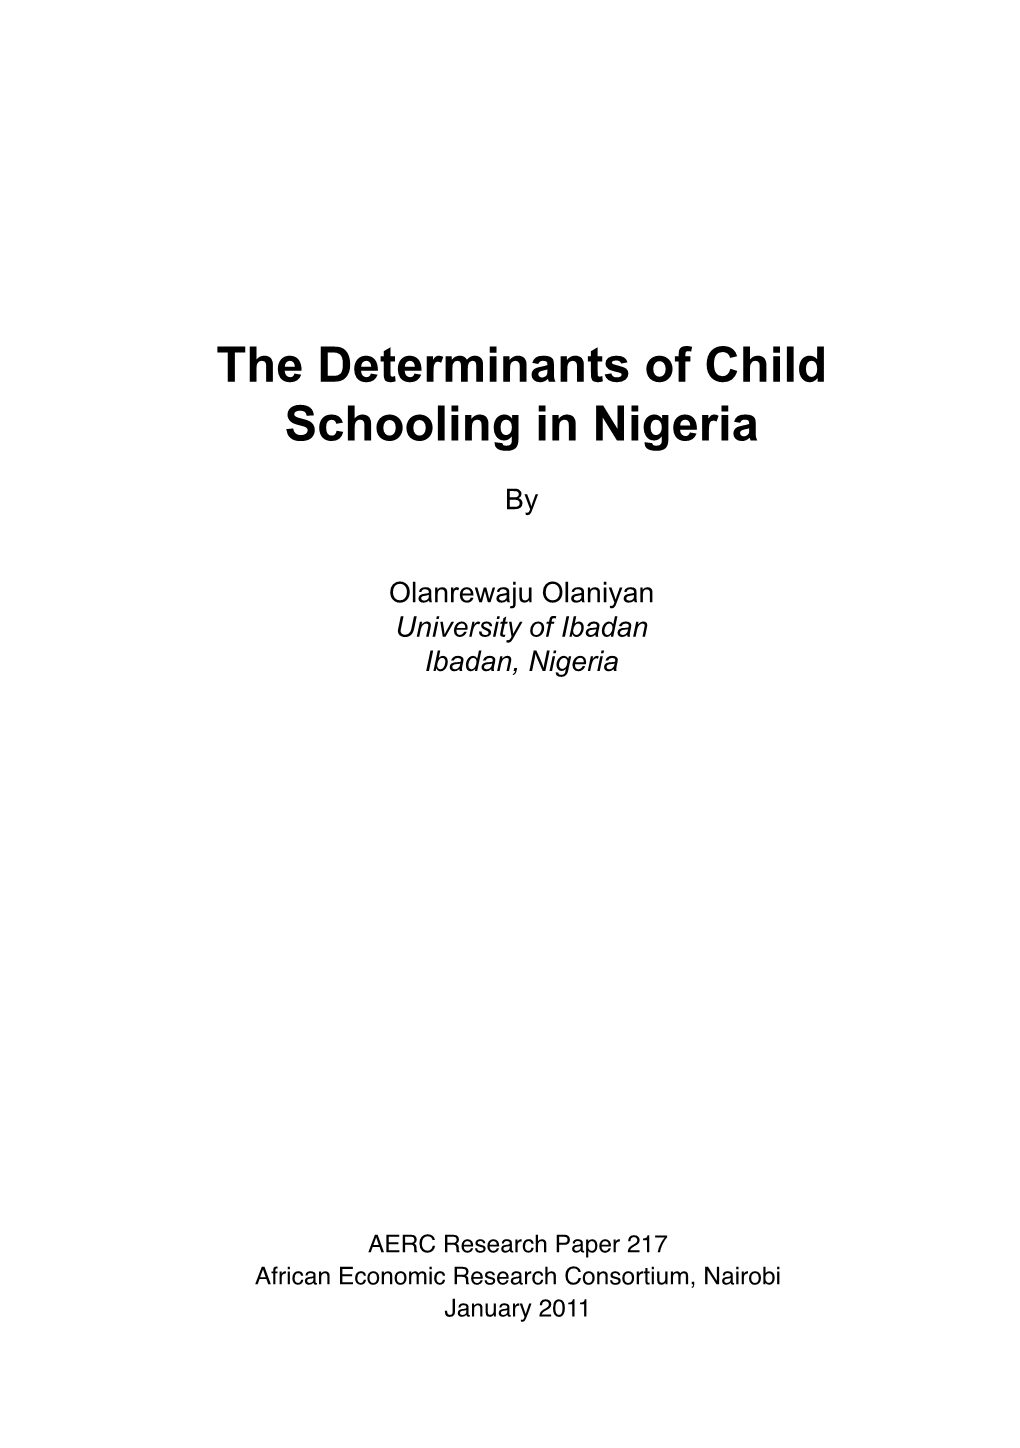 The Determinants of Child Schooling in Nigeria